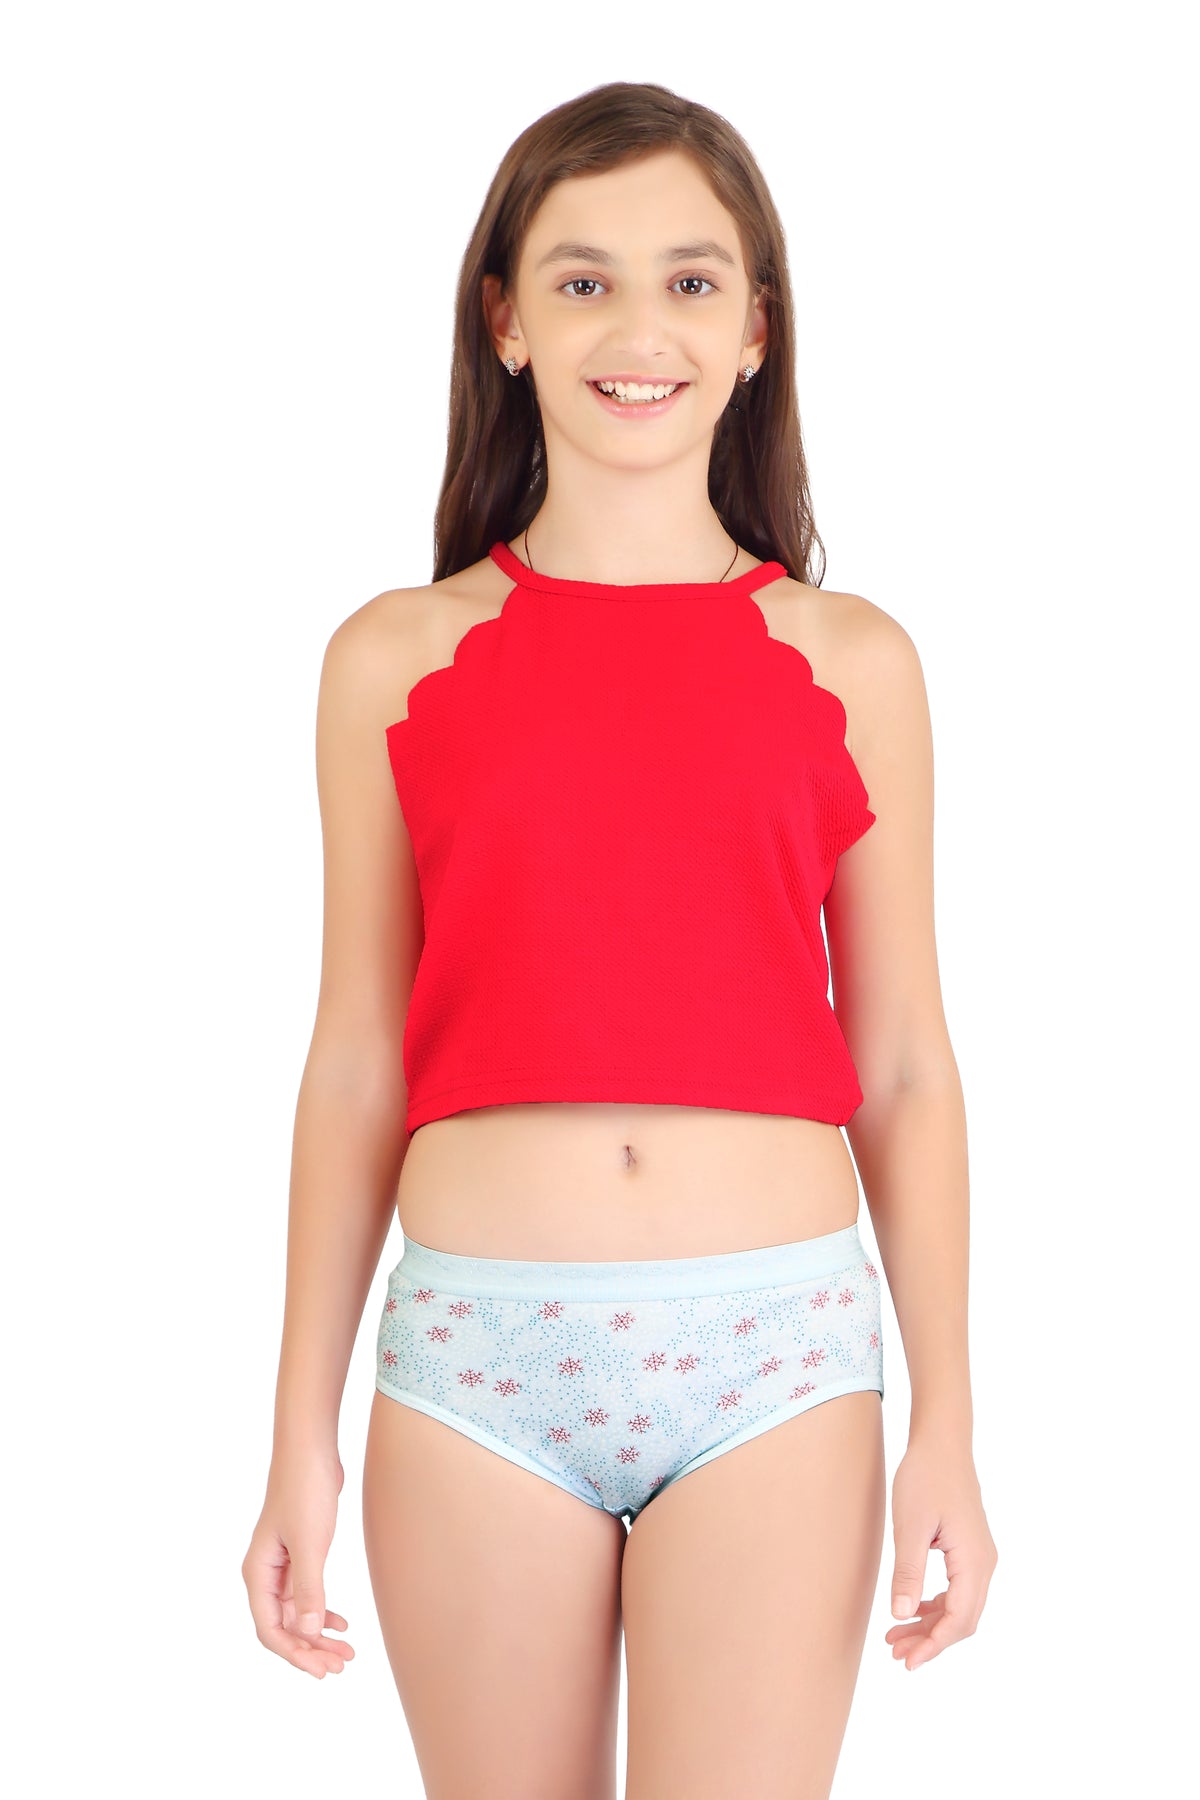 Everyday Essential Printed Teenage Girl Cotton Panty